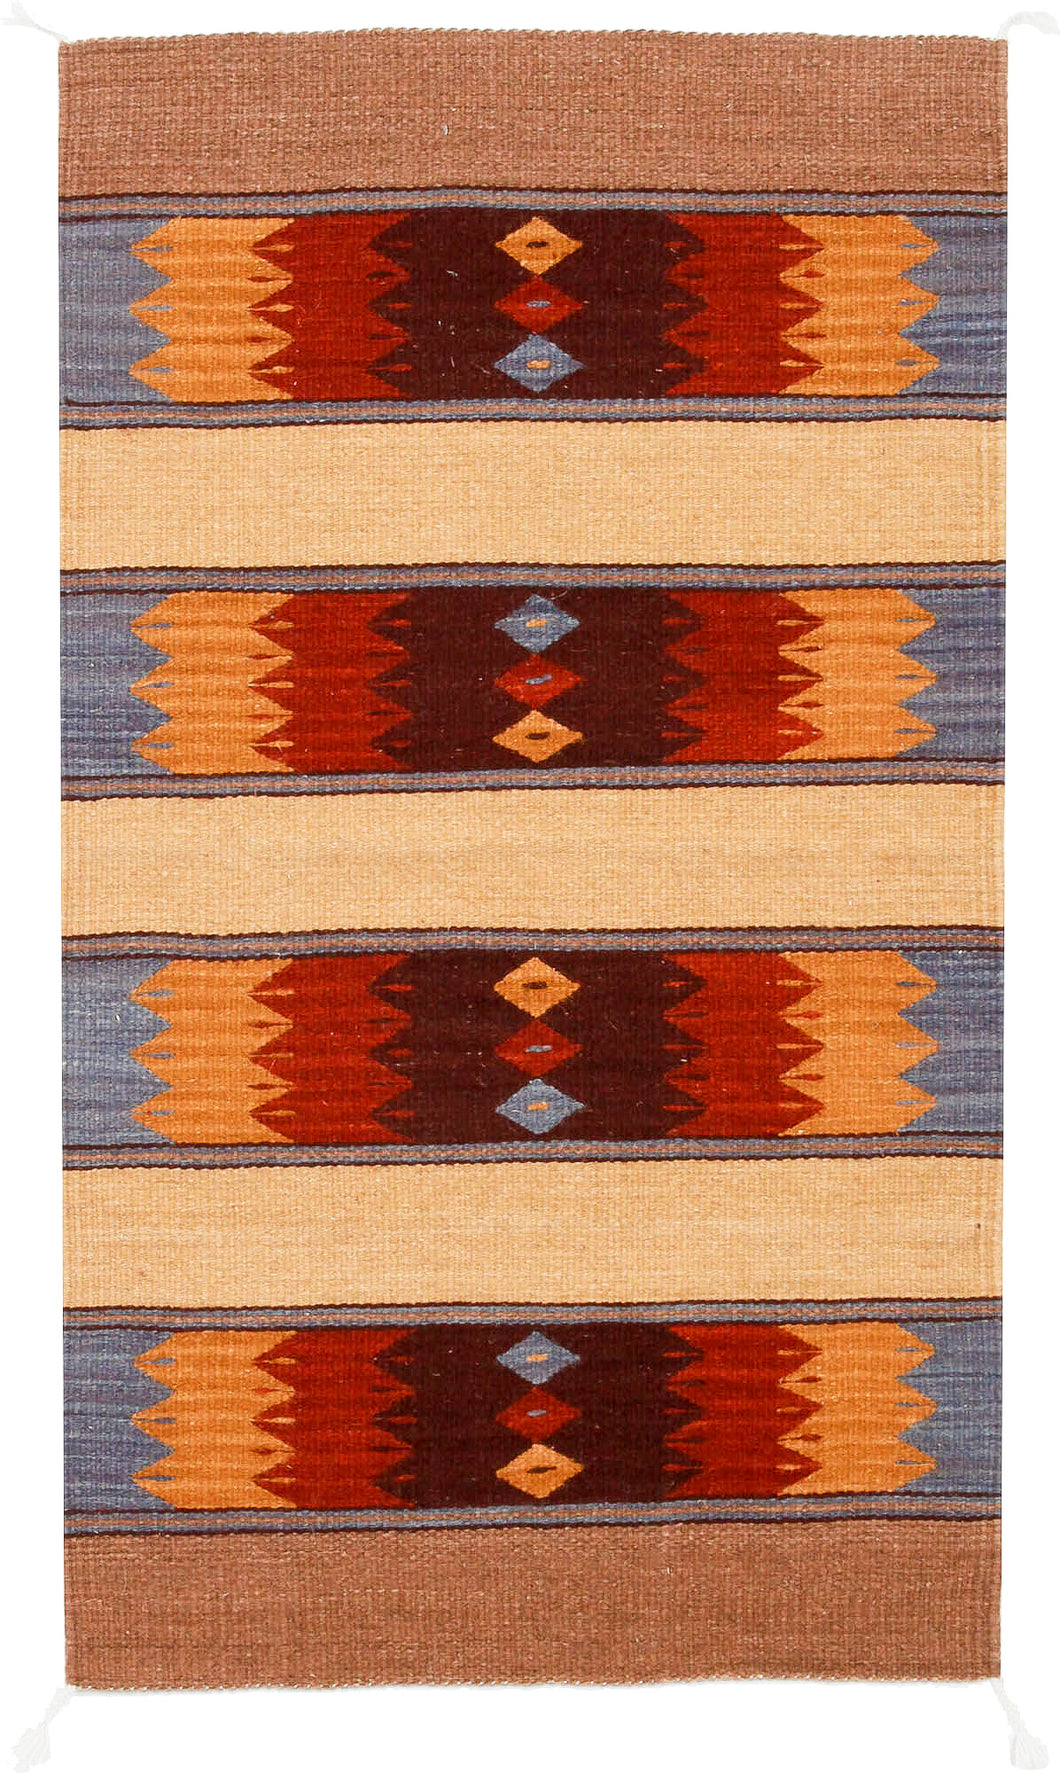 Handwoven Zapotec Indian Rug - Papalote Azul Wool Oaxacan Textile